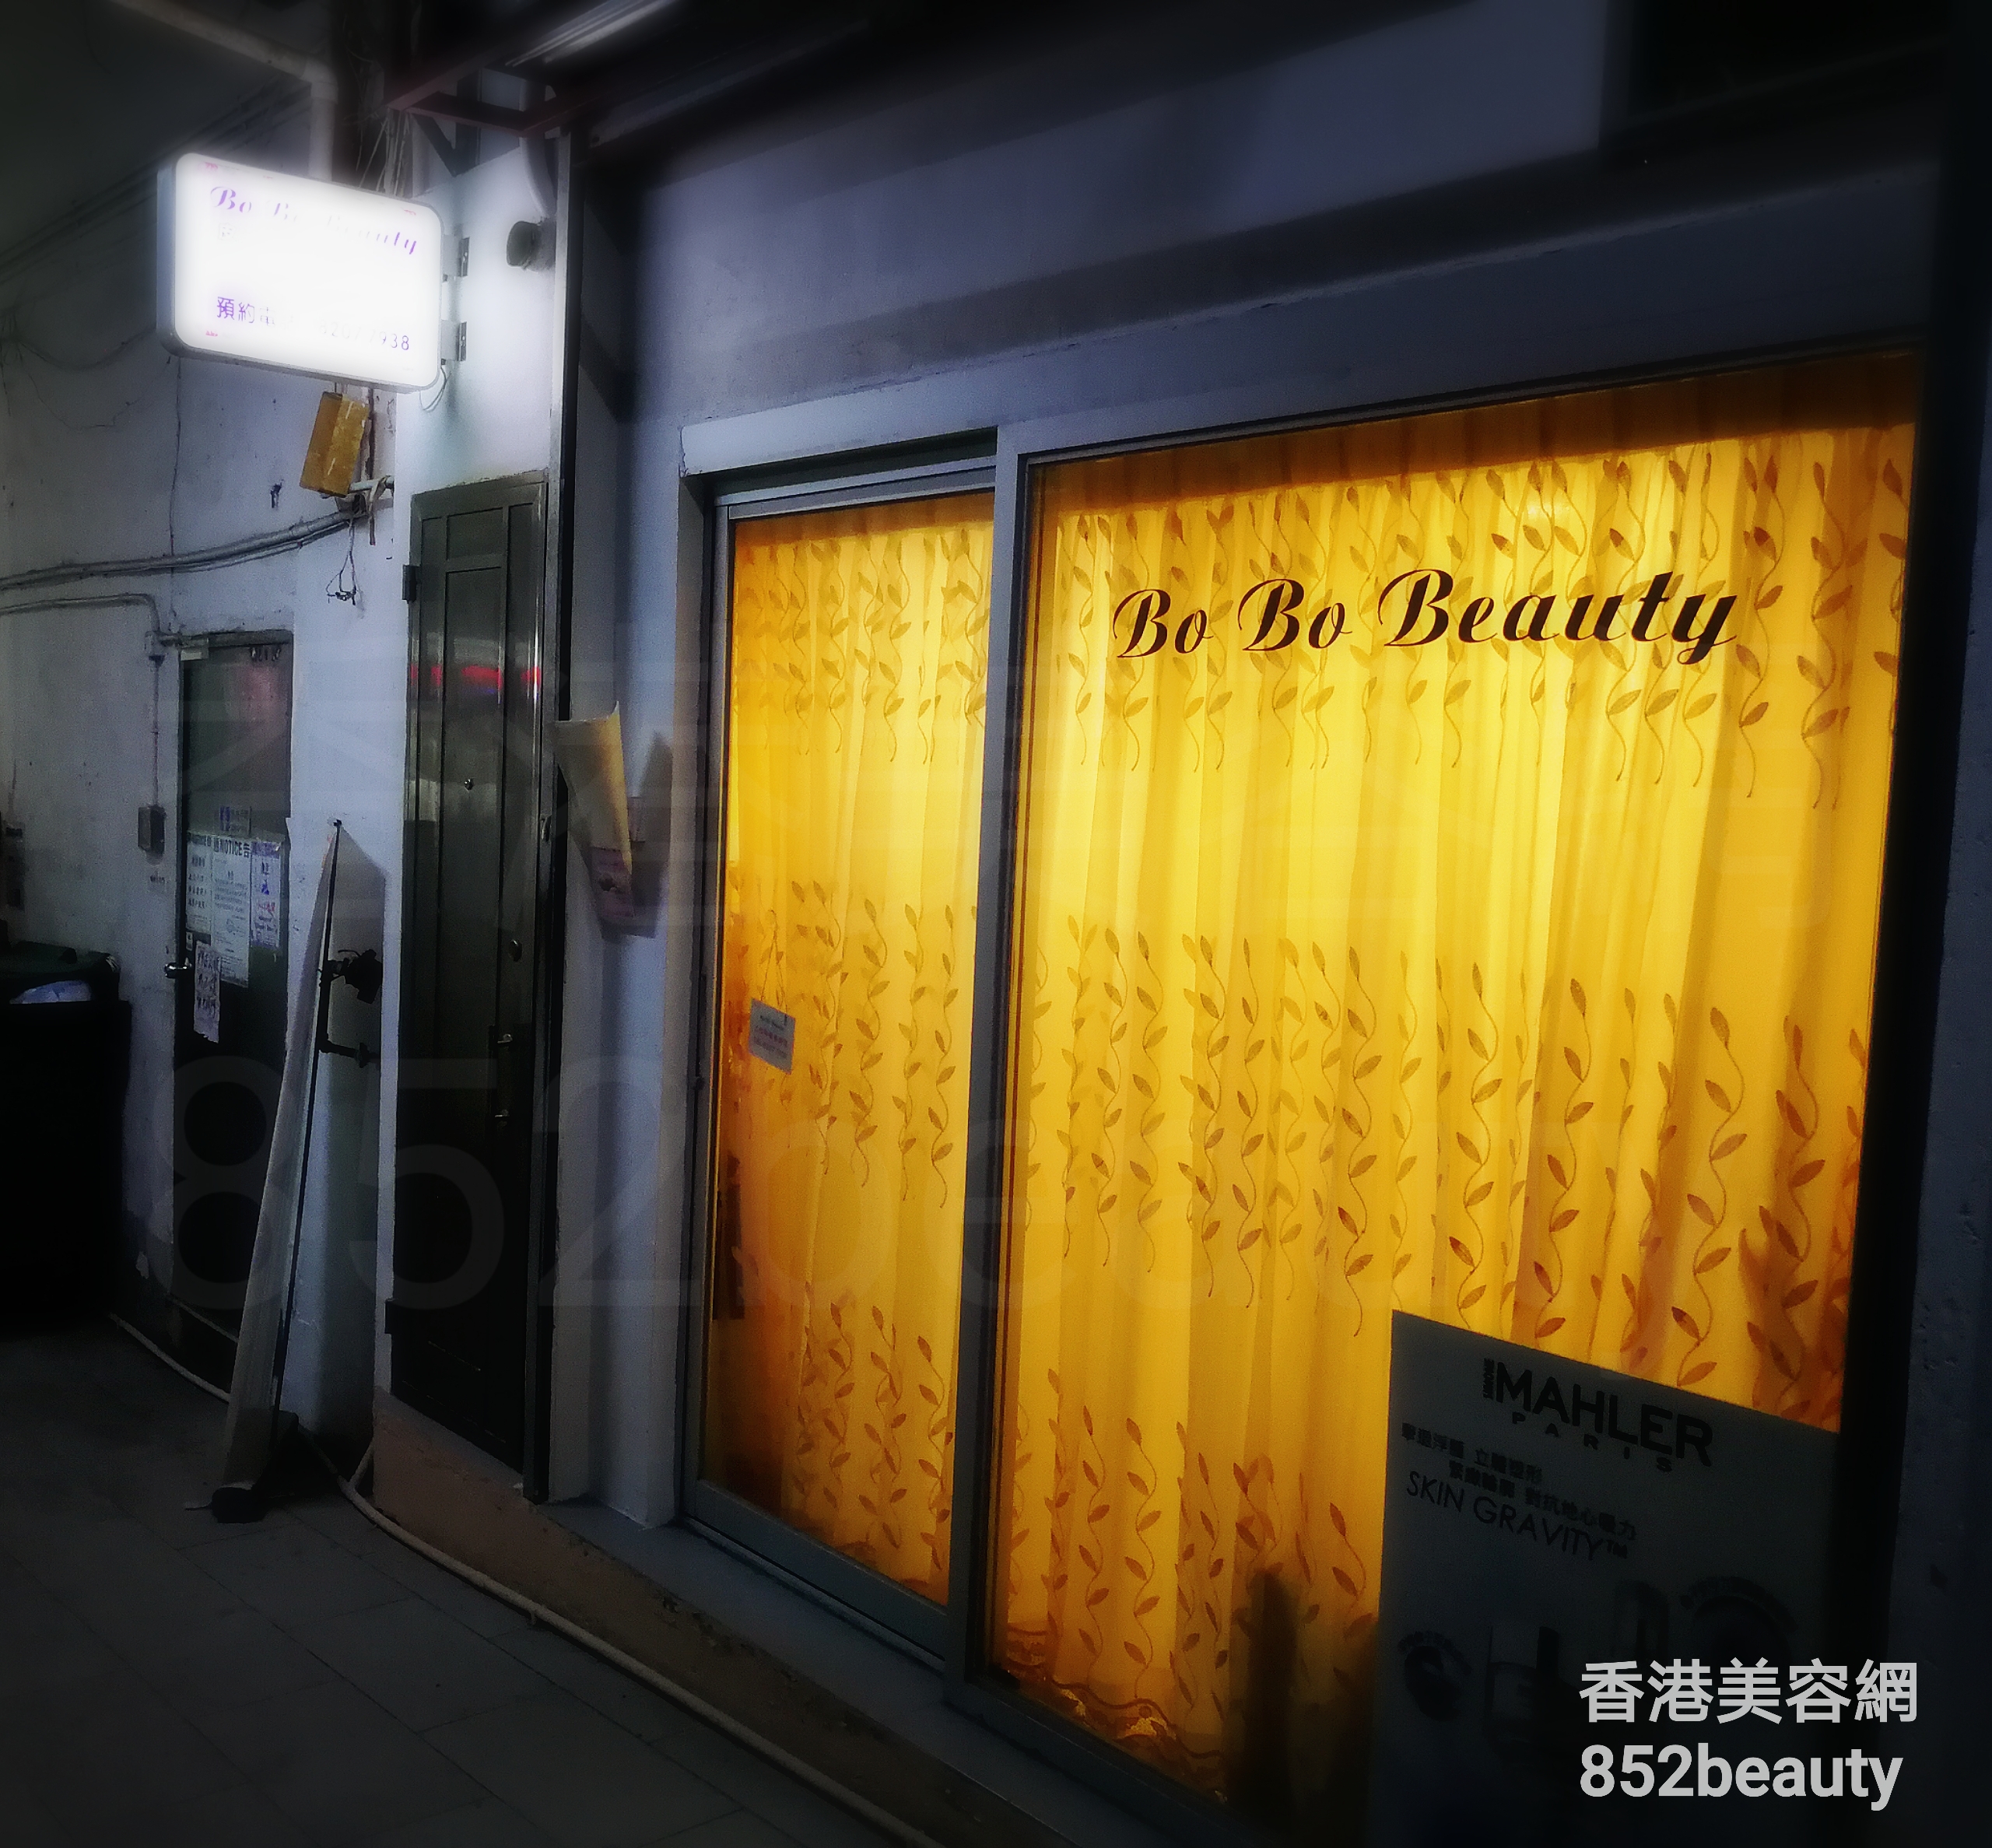 Massage/SPA: Bo Bo Beauty